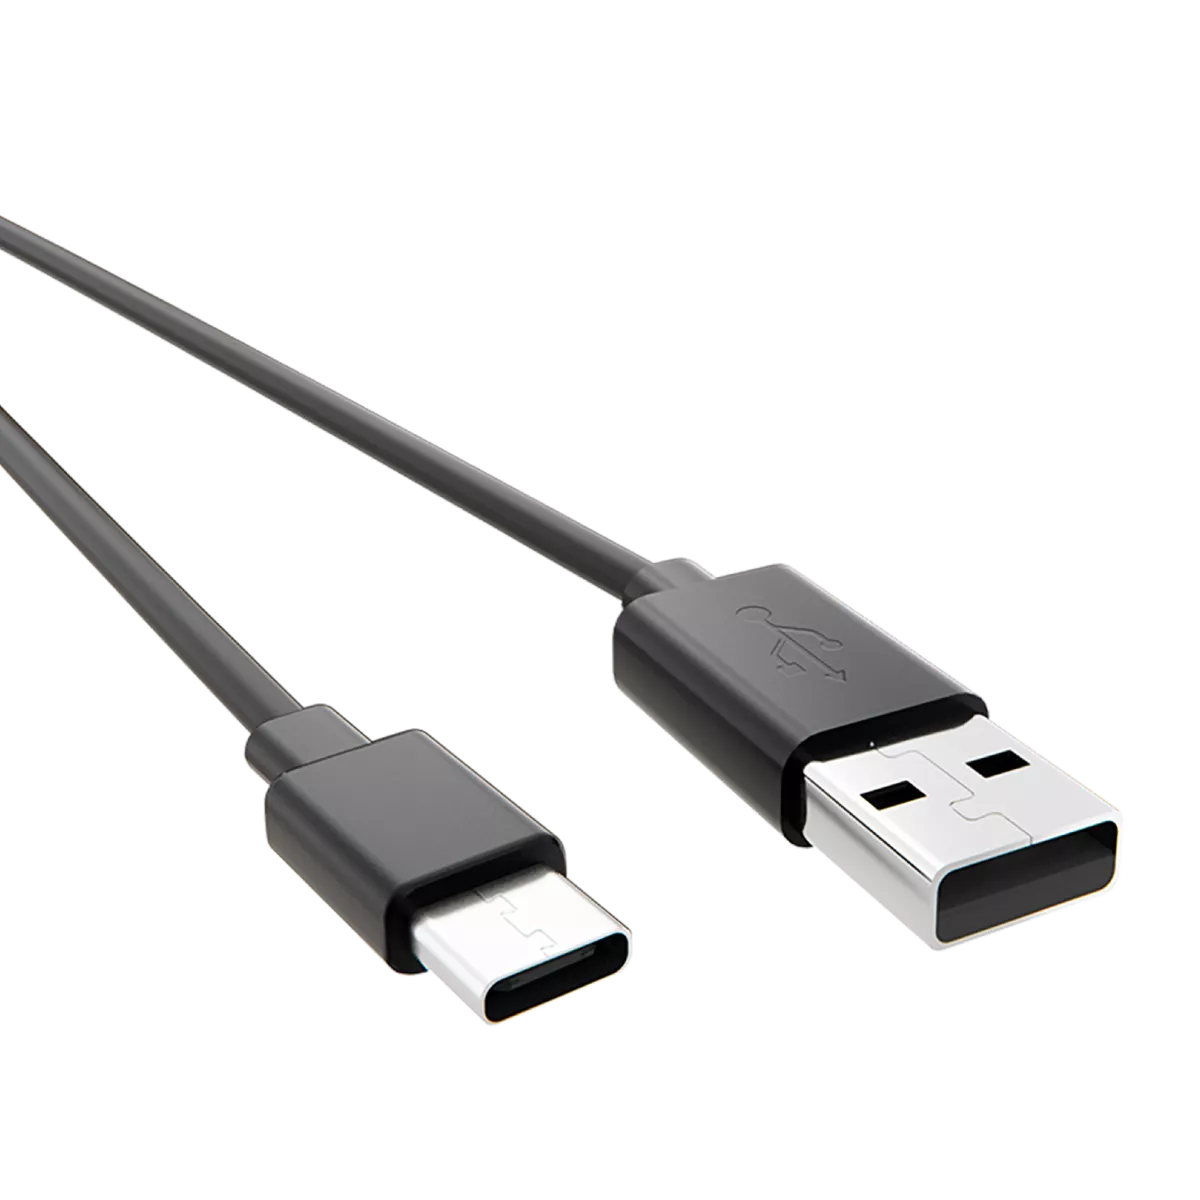 Cable de carga tipo C Ploom X Advanced negro - plano cenital
